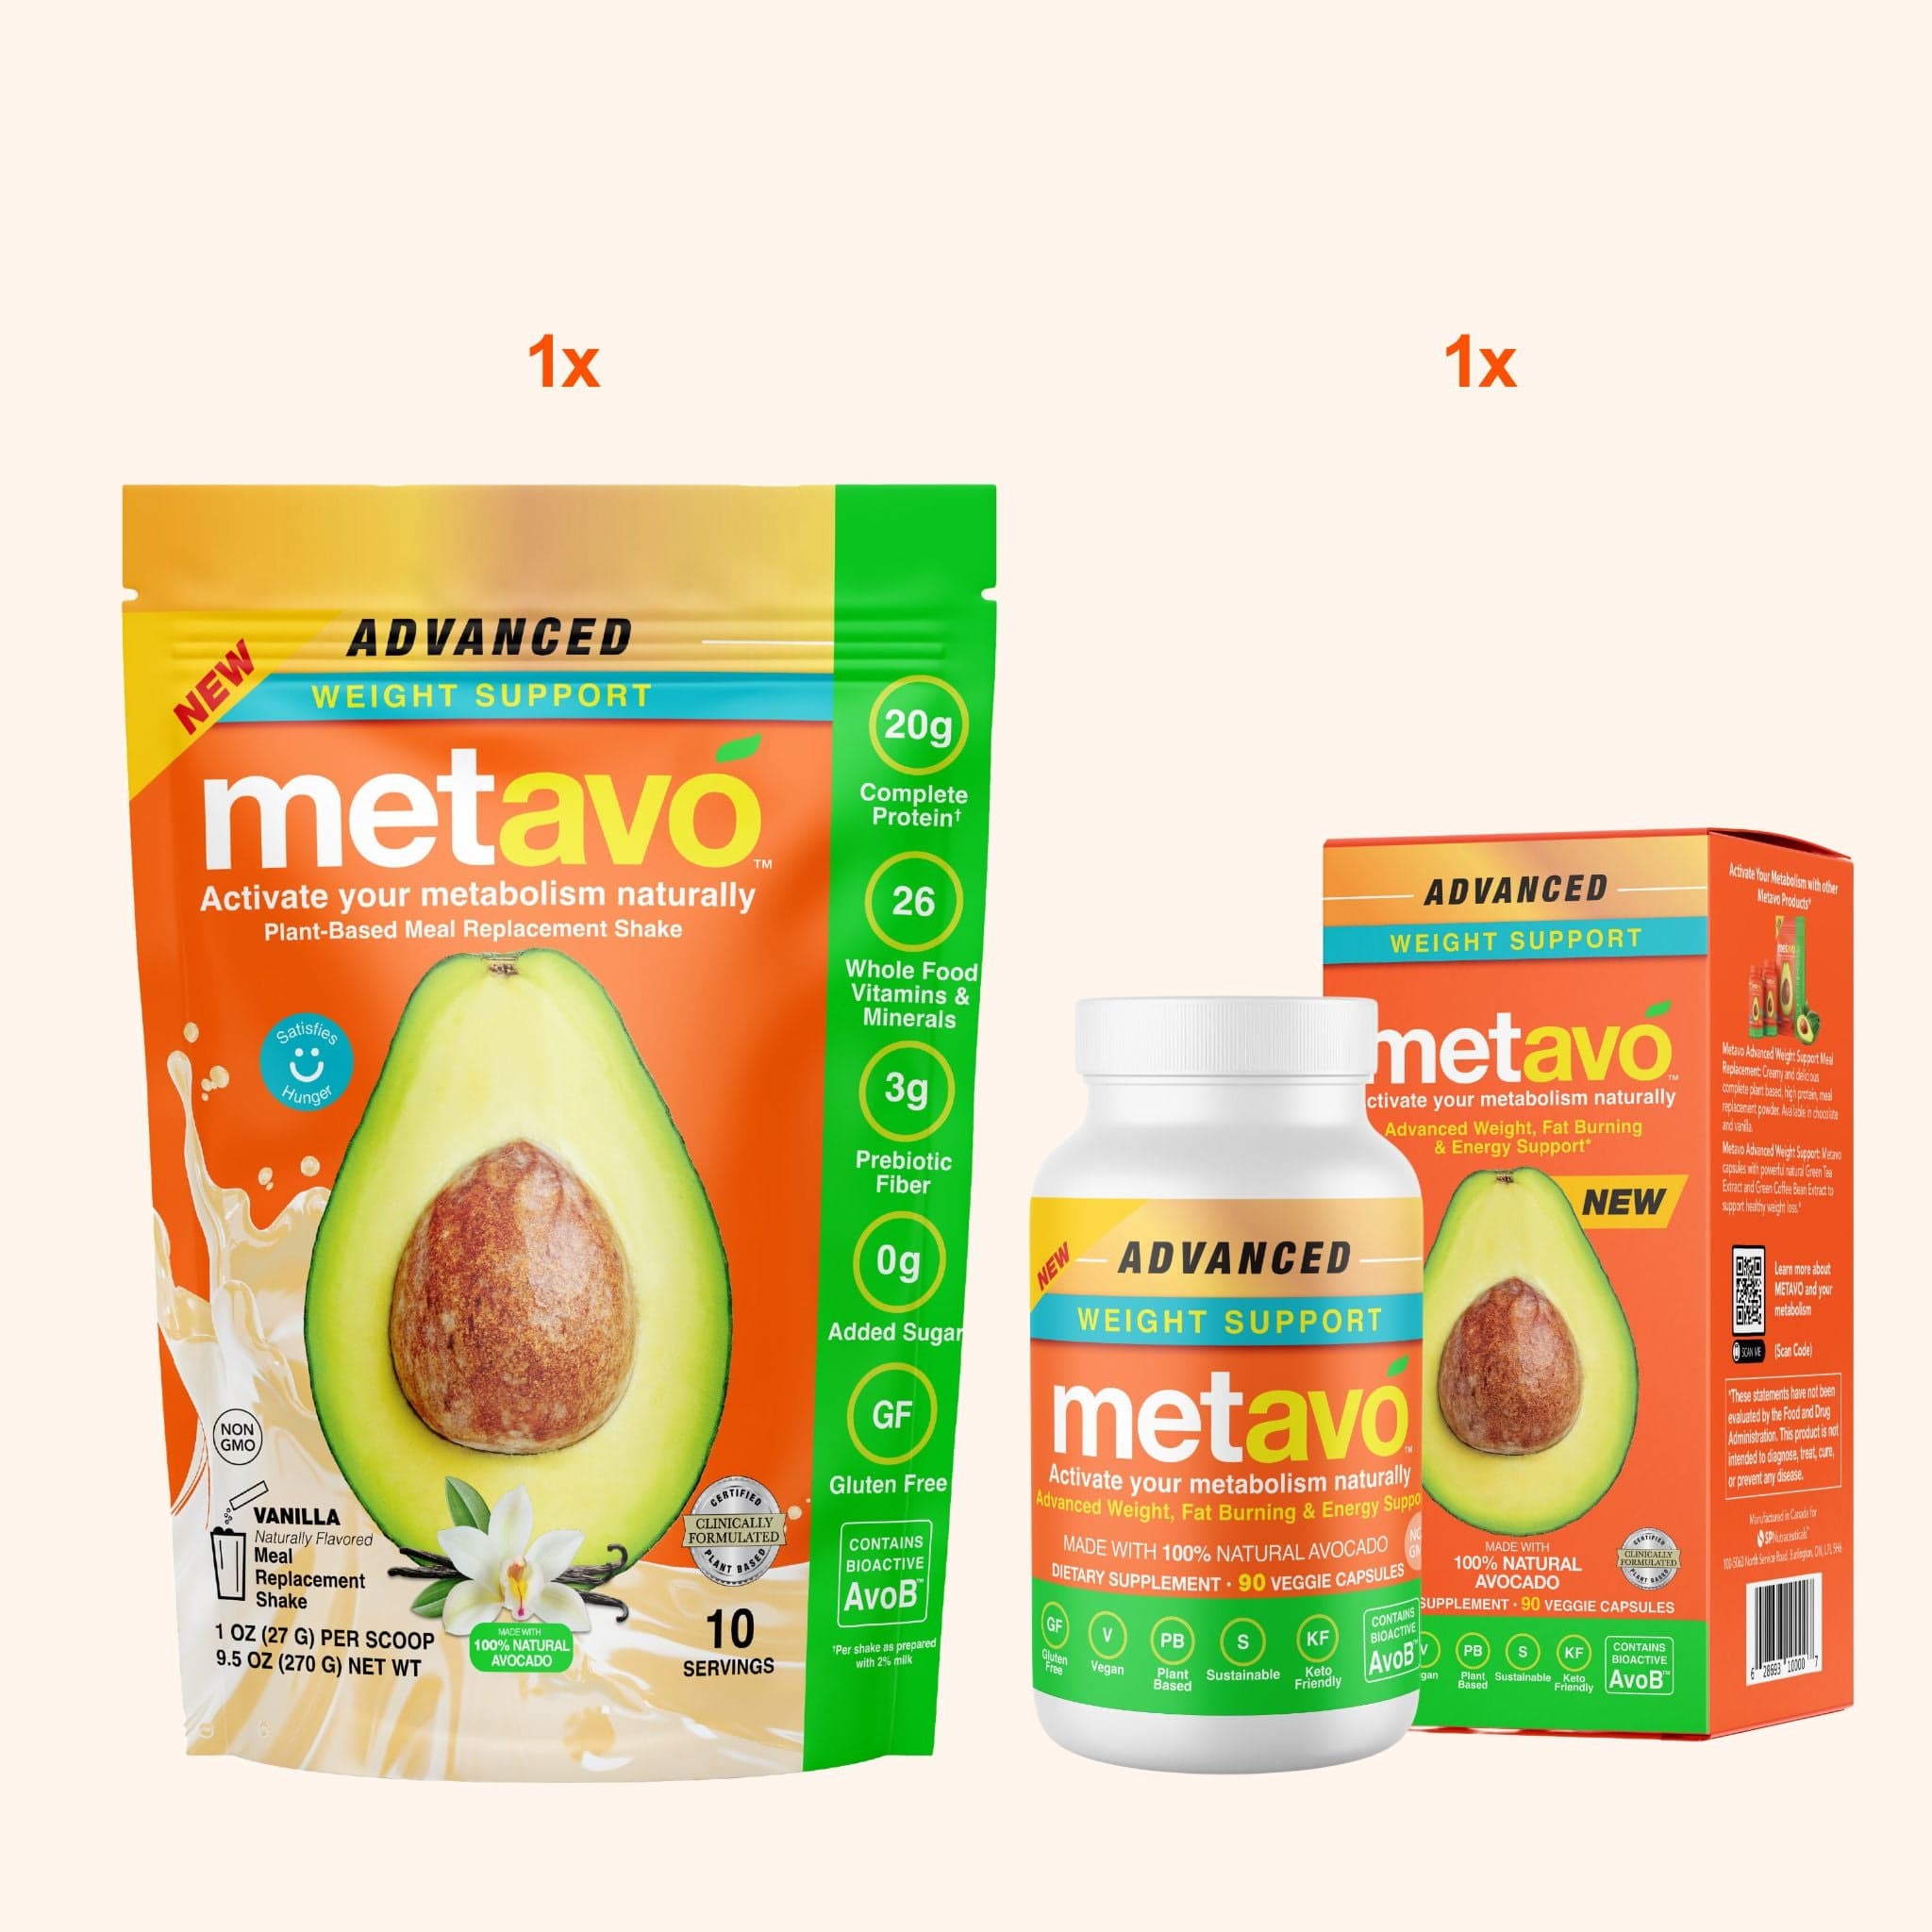 Metavo.com Advanced Weight Sample Kit: